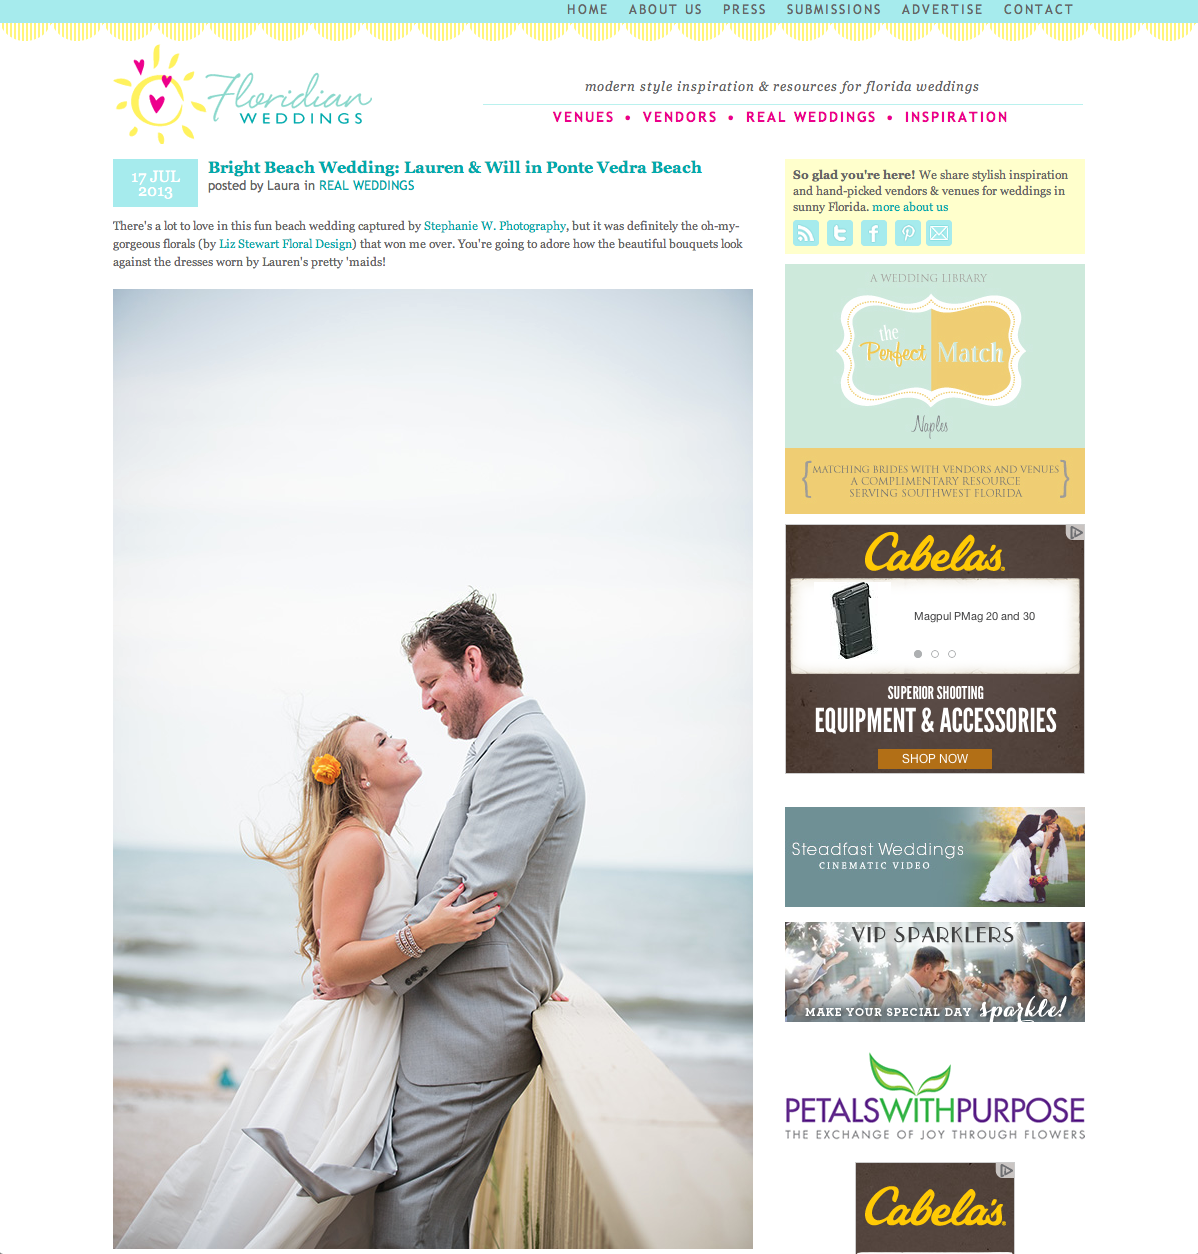 Lauren + Will's Ponte Vedra Beach Wedding at The Lodge & Club featured on Floridan Weddings Blog